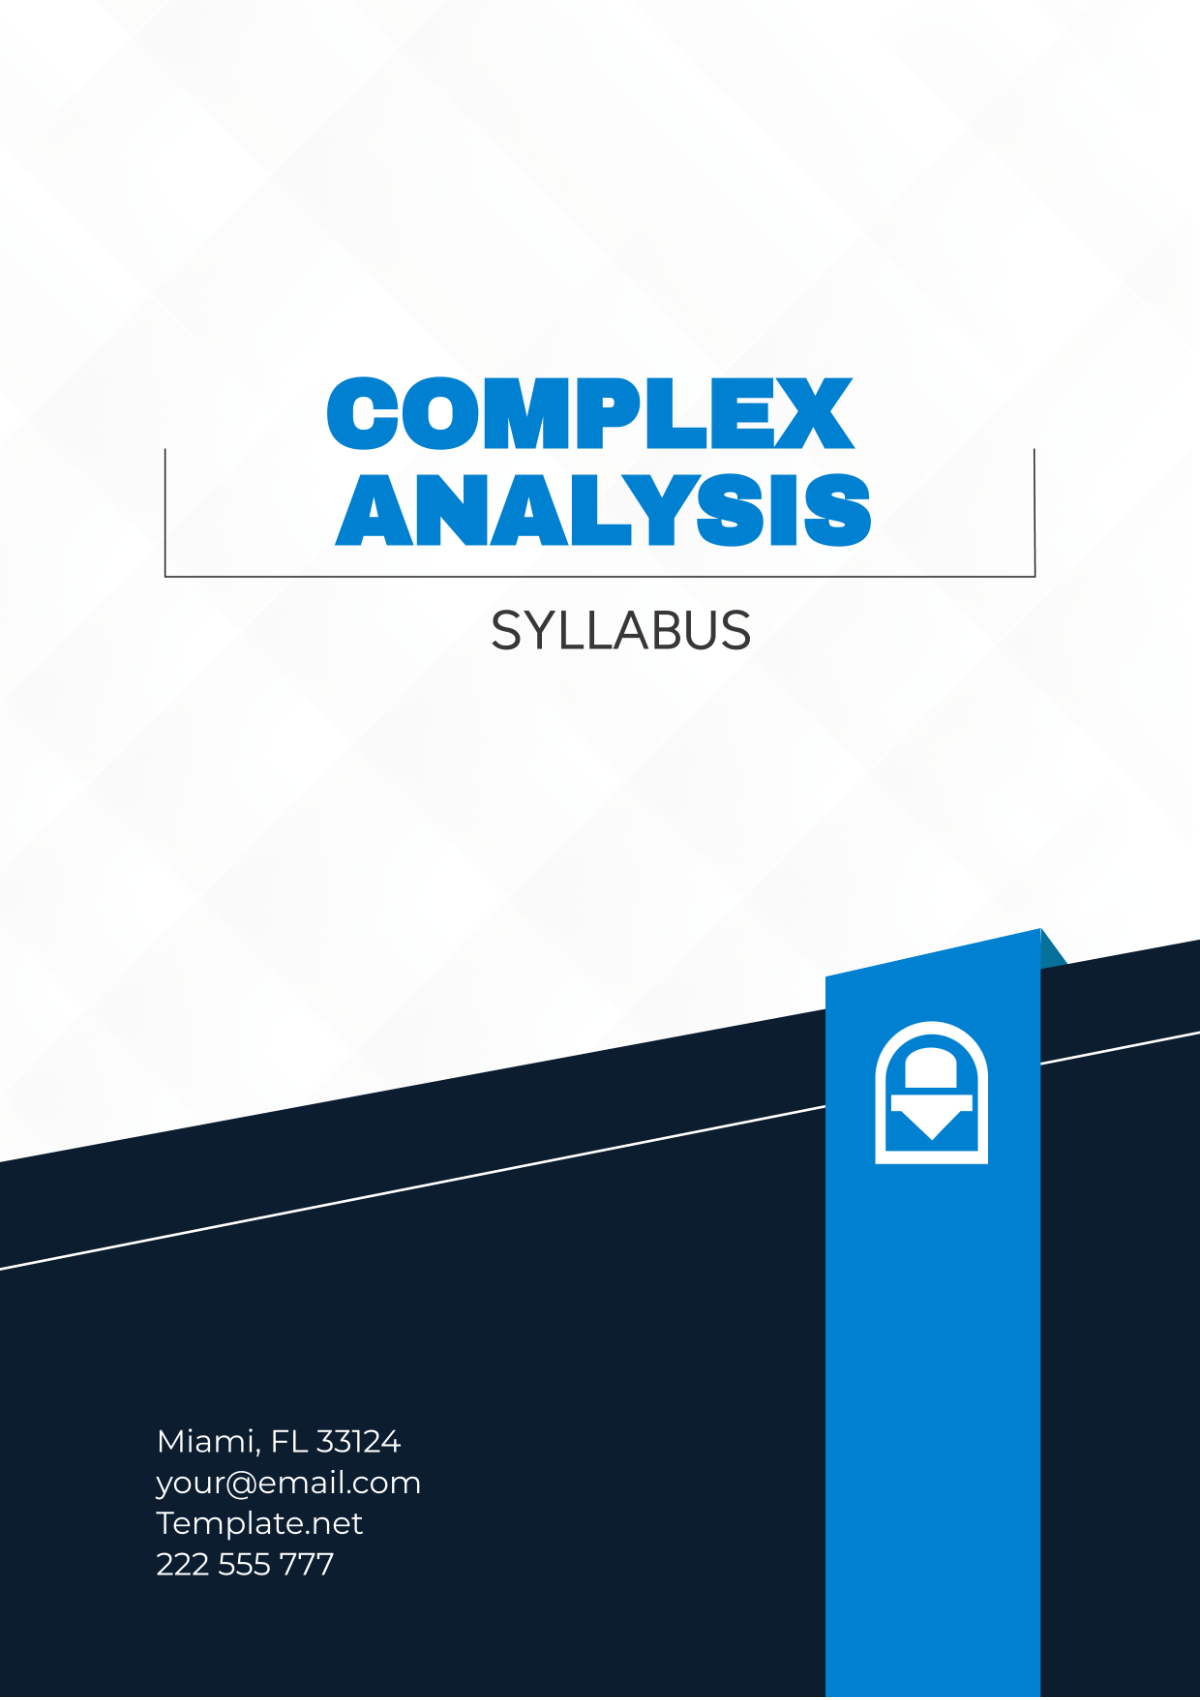 Complex Analysis Syllabus Template